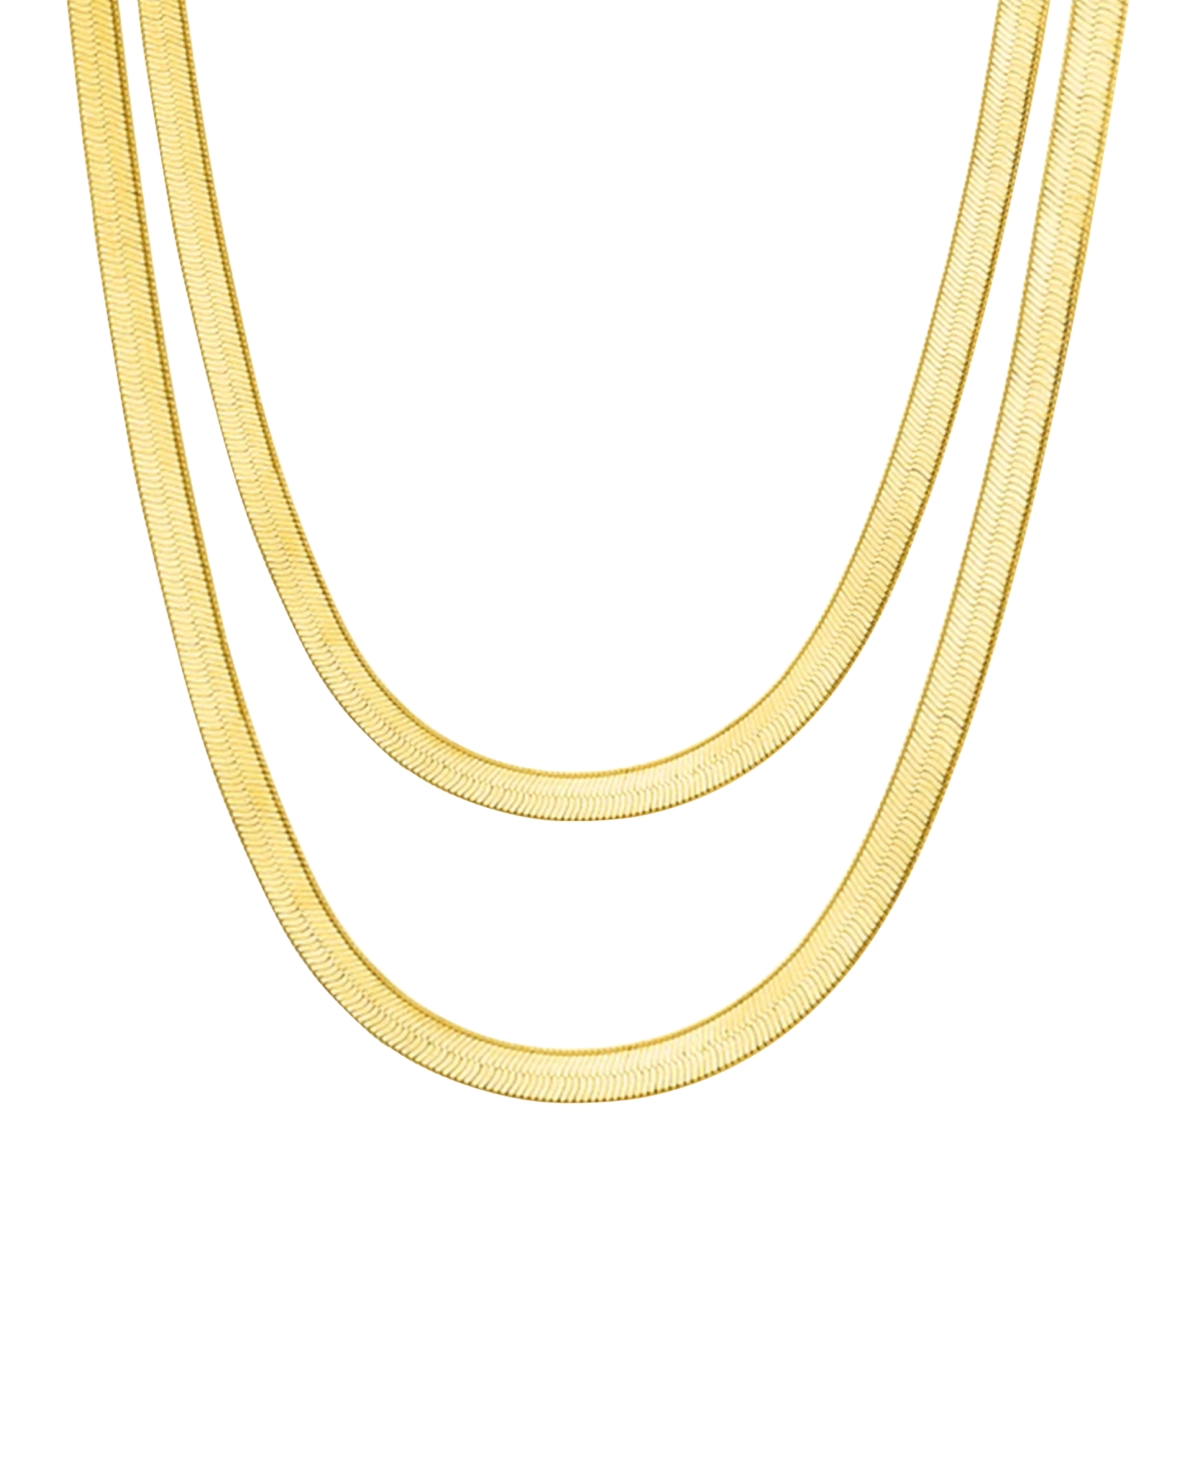 Ben Oni Maelle 2 Pieces Herringbone Necklace Set